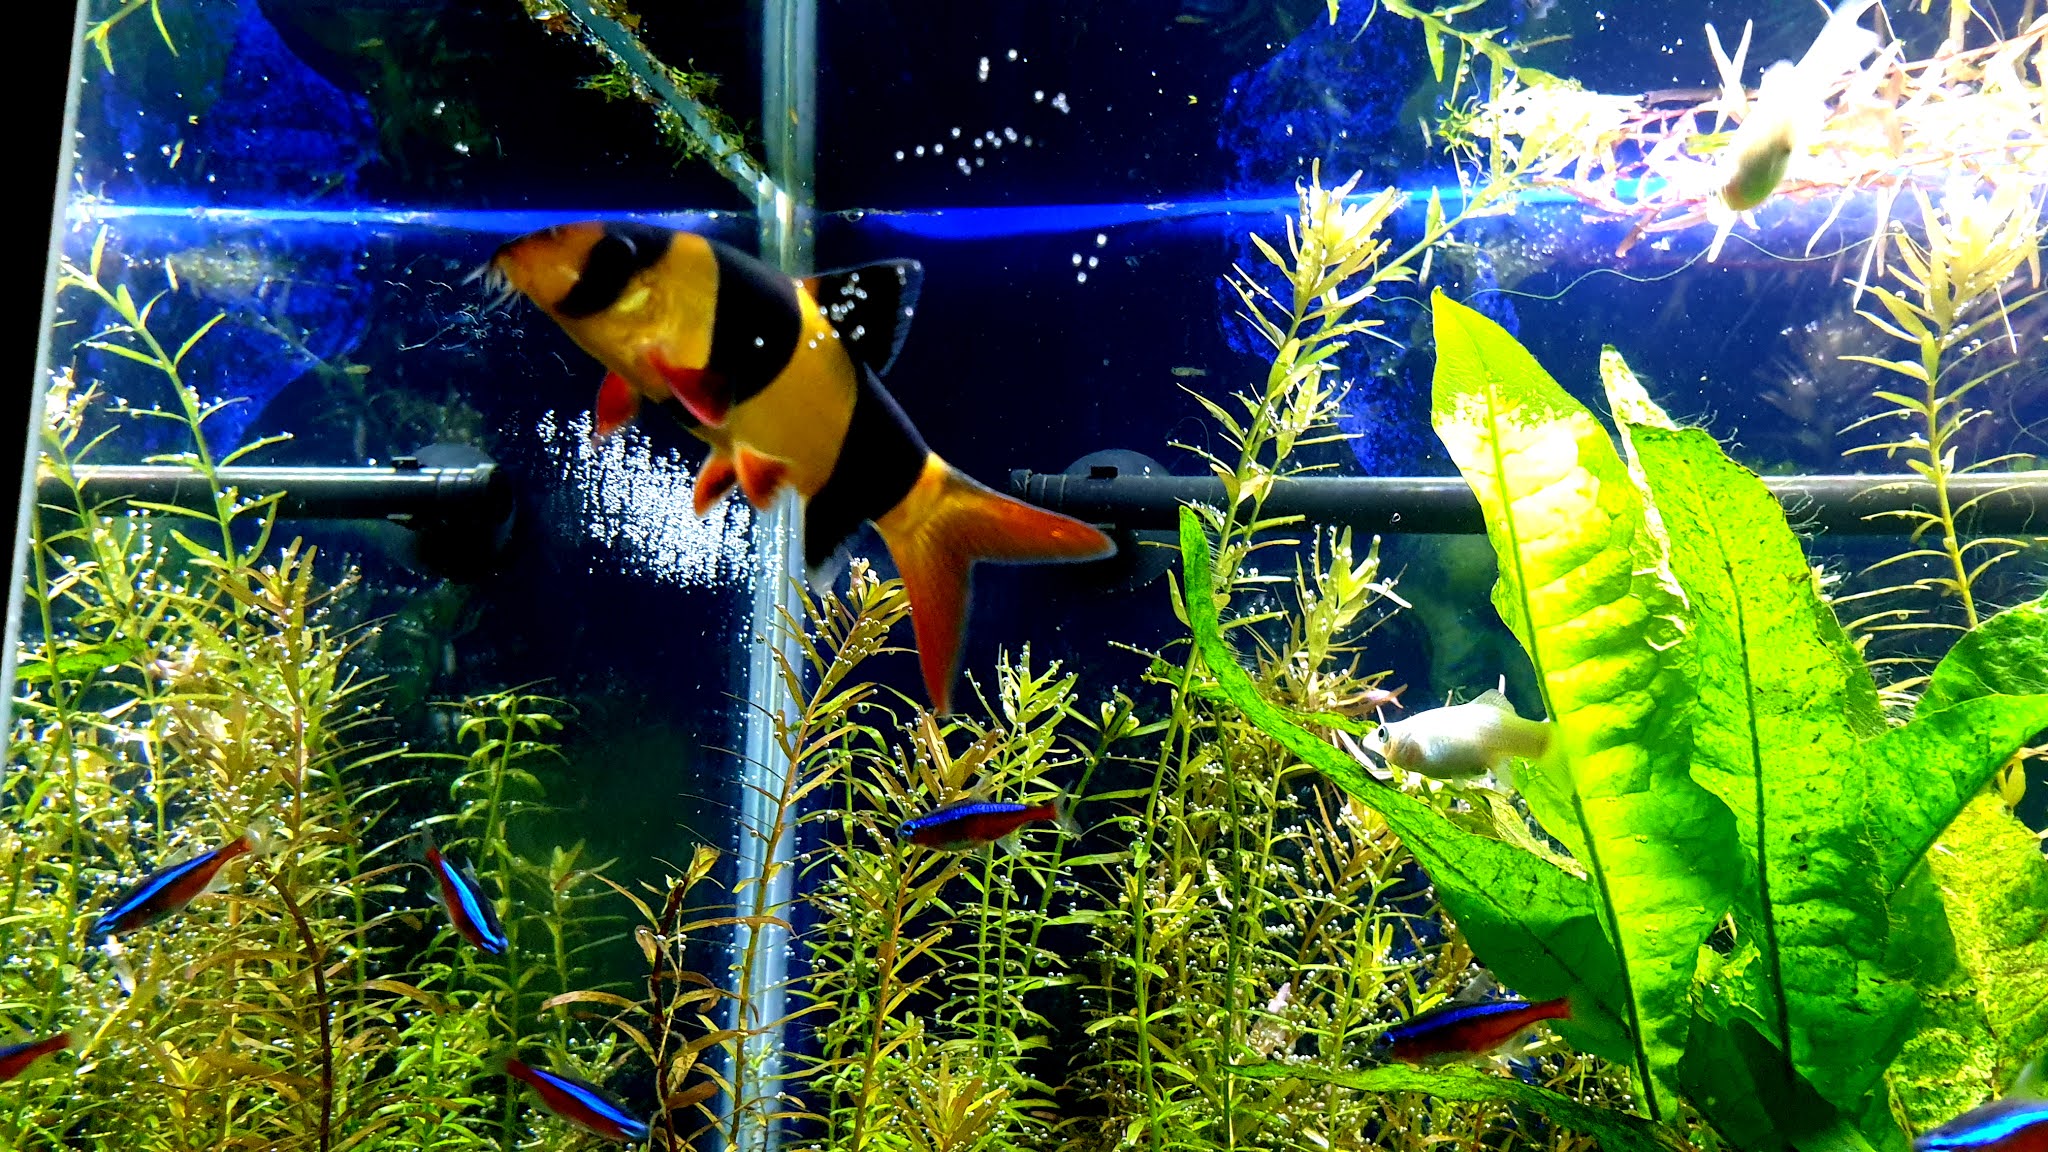 Munity Fish Tank 4k Ultra HD Wallpaper Background